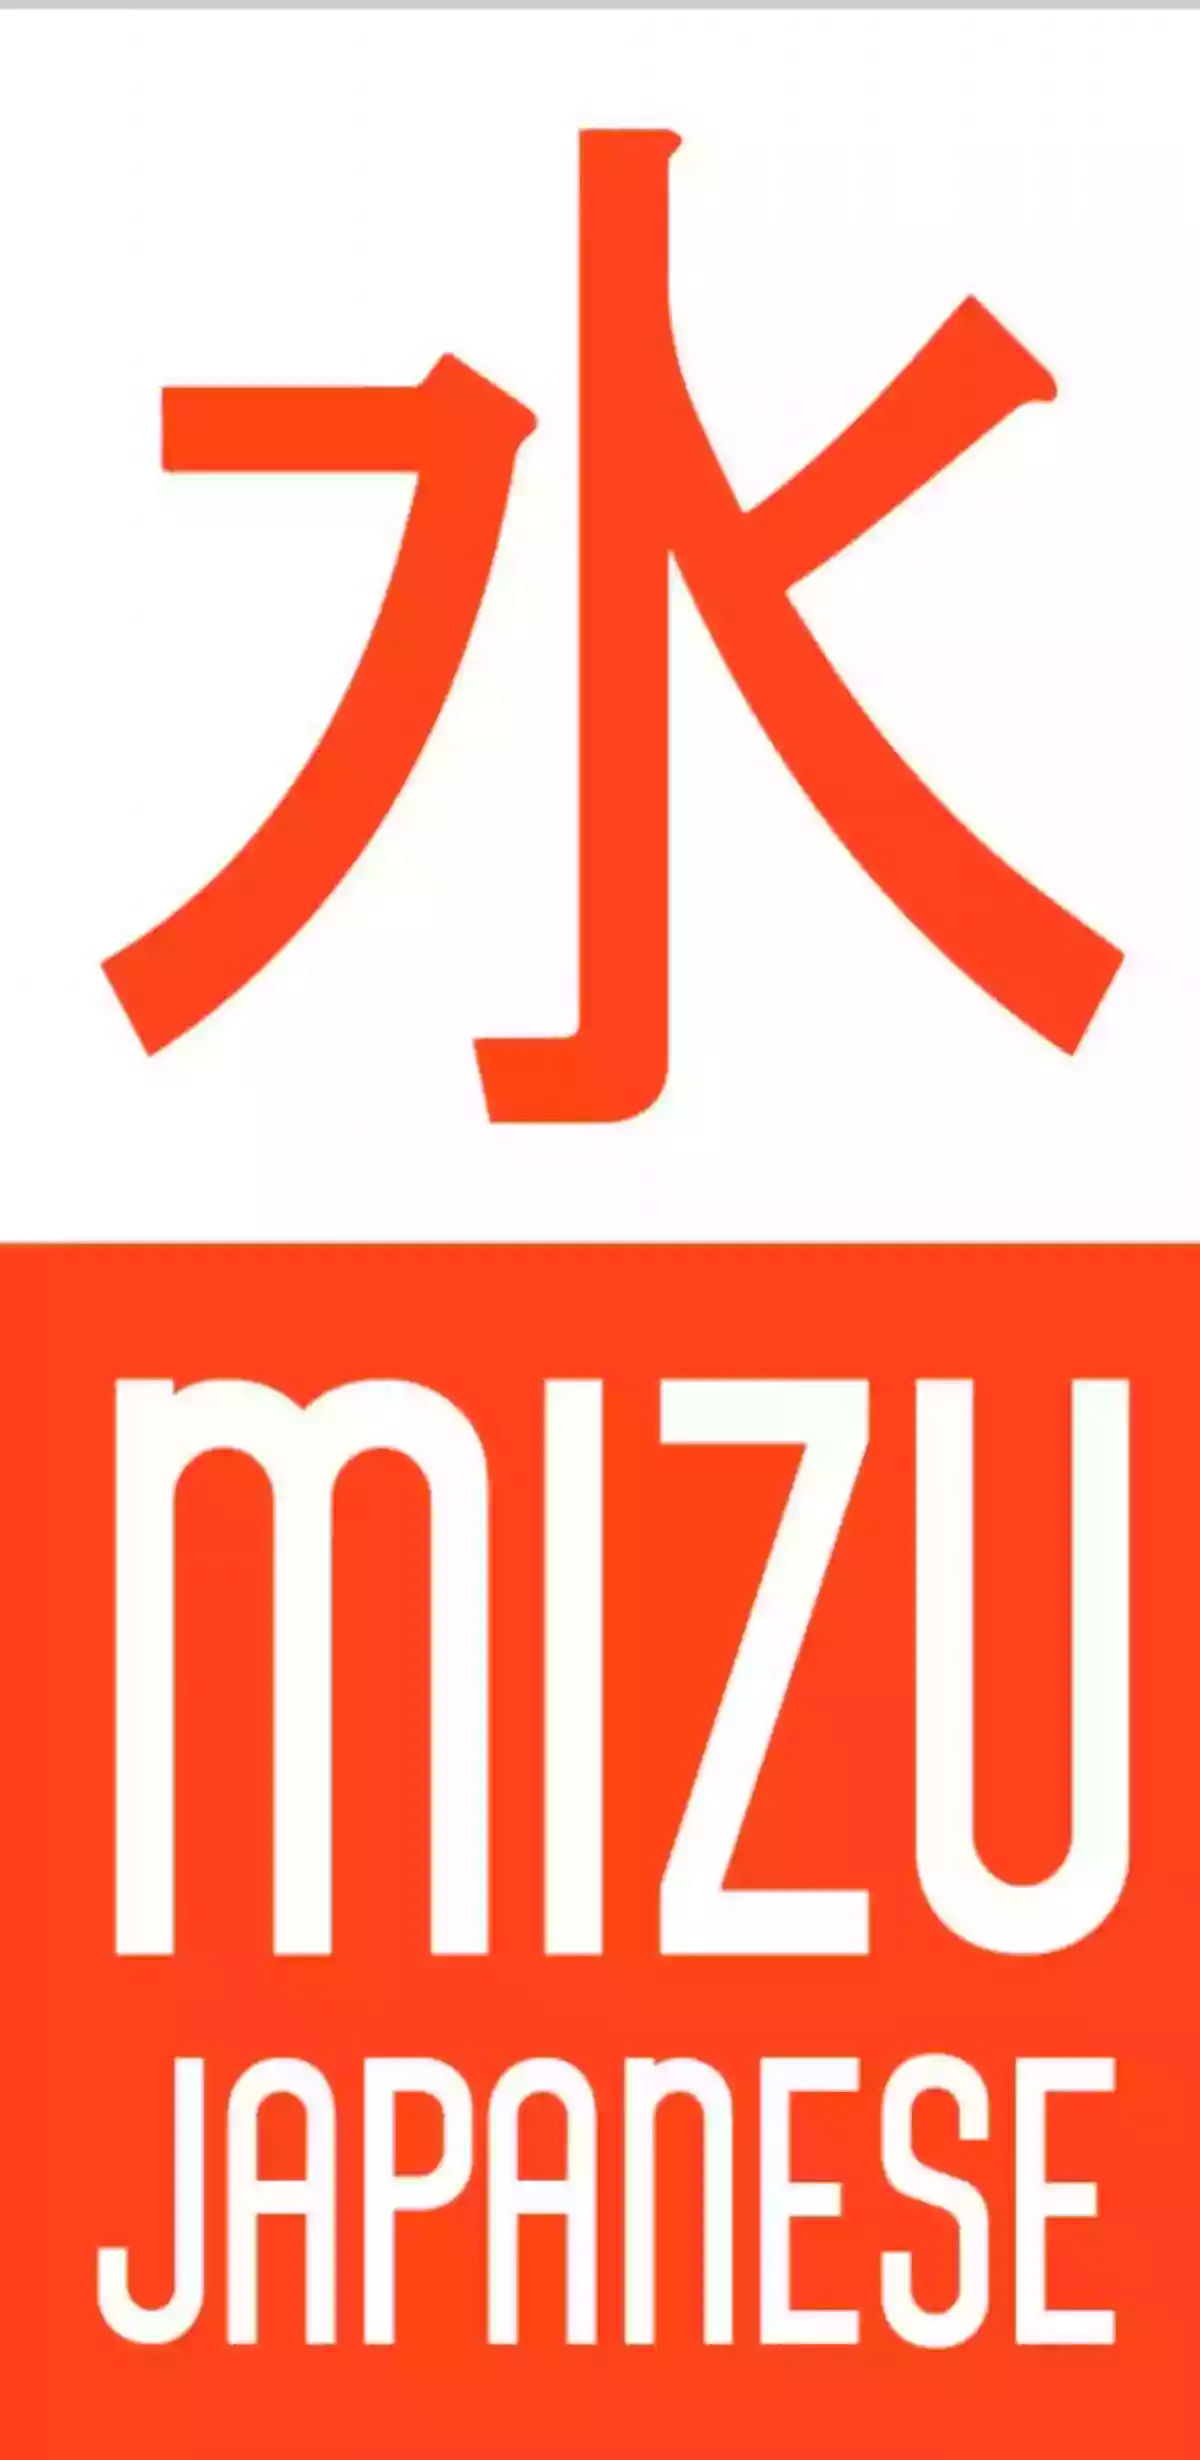 Mizu Japanese